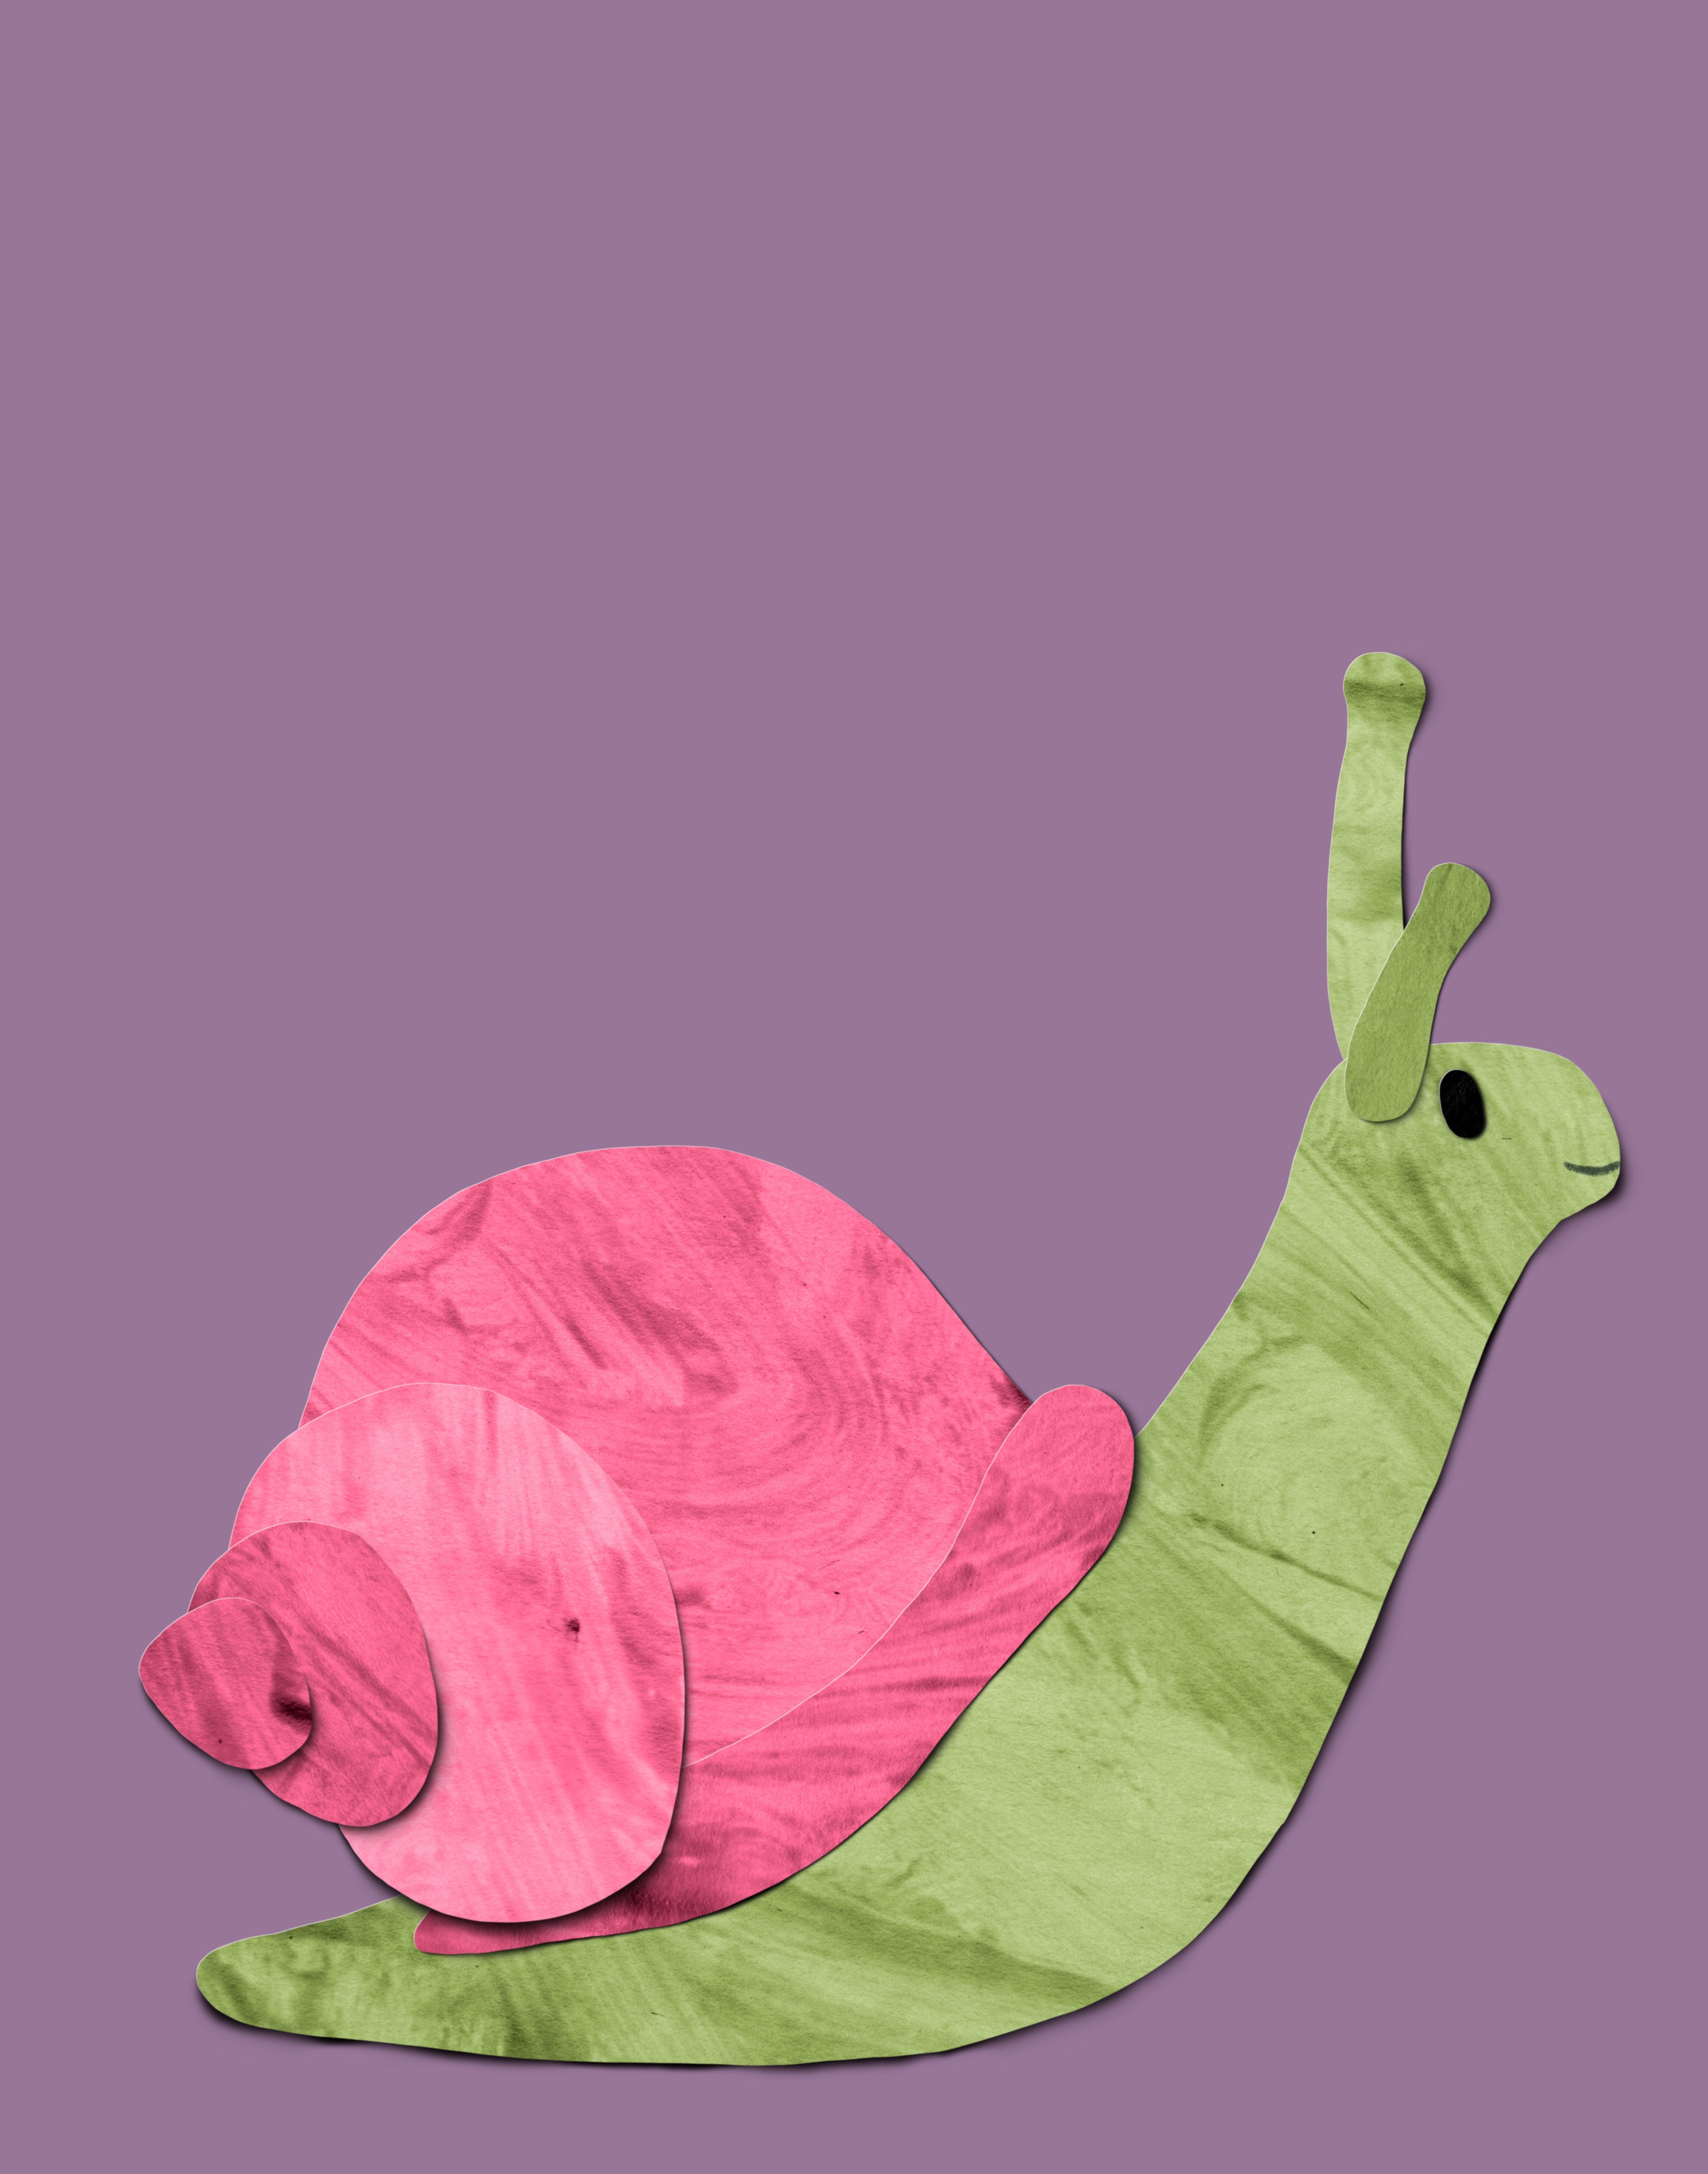 Snail - printable art - Collage Style